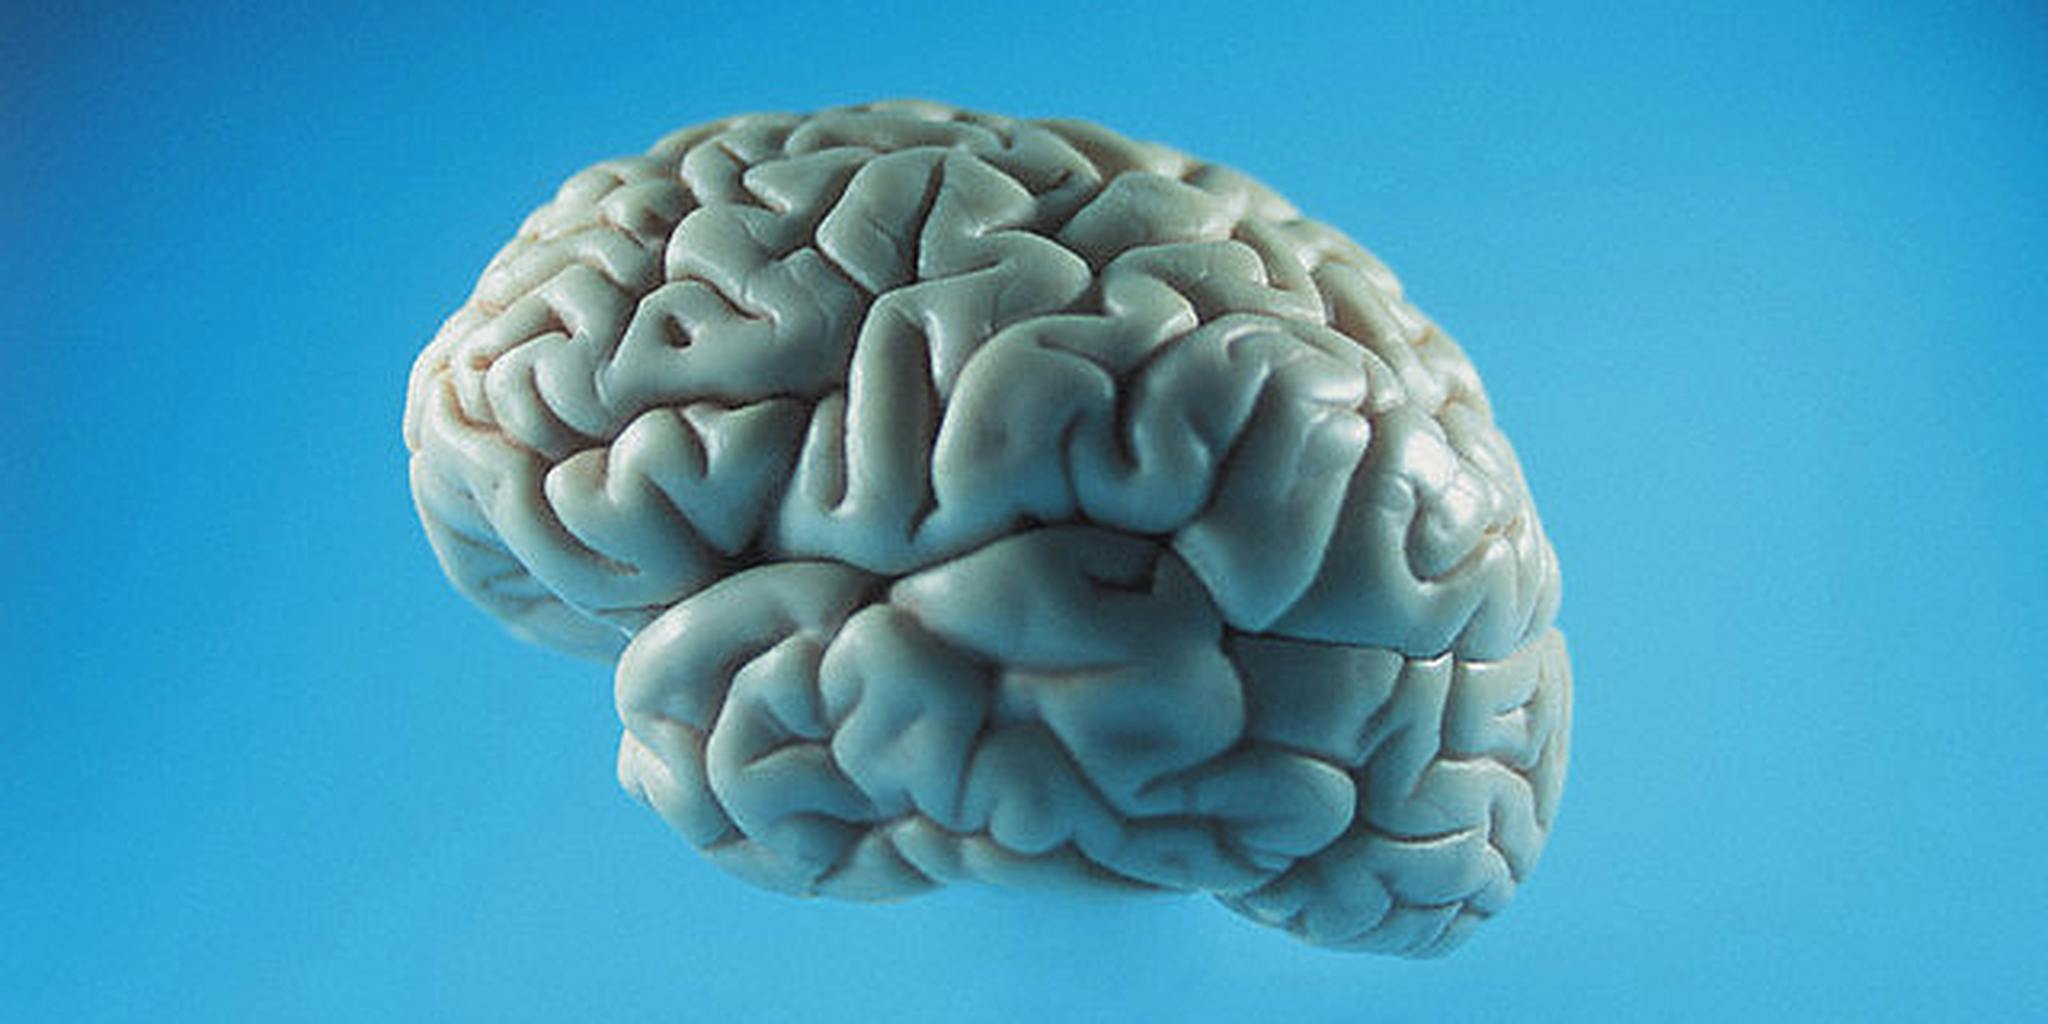 Brain 28. Цветок похожий на мозг. Мозг похожий на губку. Облака похожие на мозг. Животное похожее на мозг в биологии.